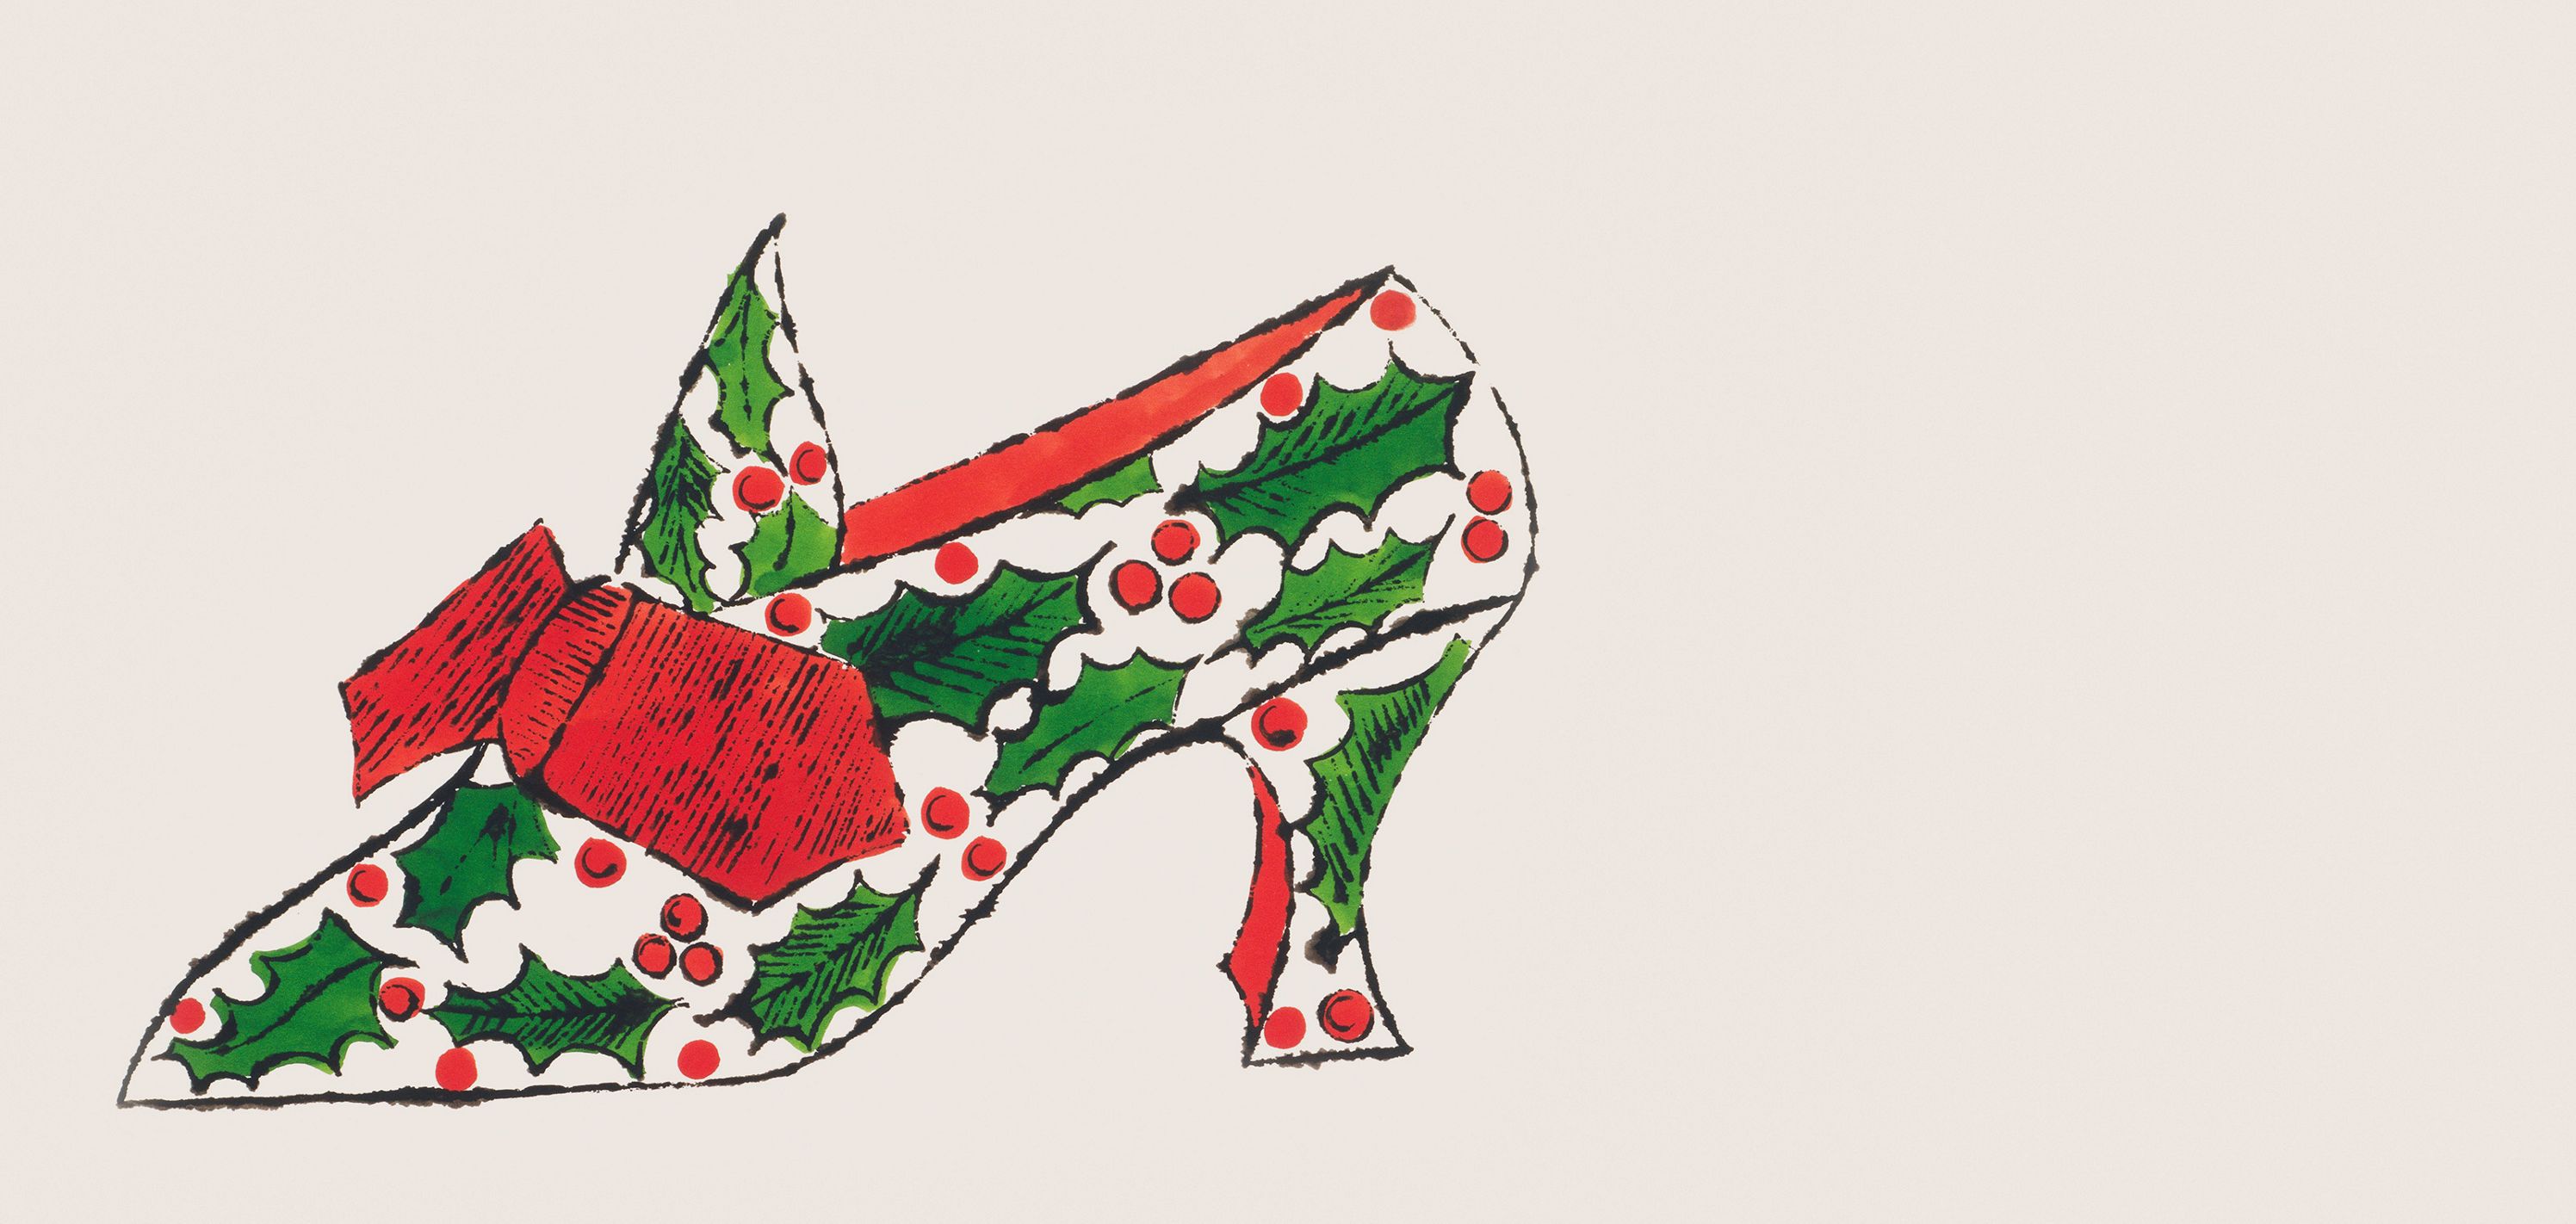 Holiday Greetings from Tiffany x Andy Warhol | Tiffany & Co.